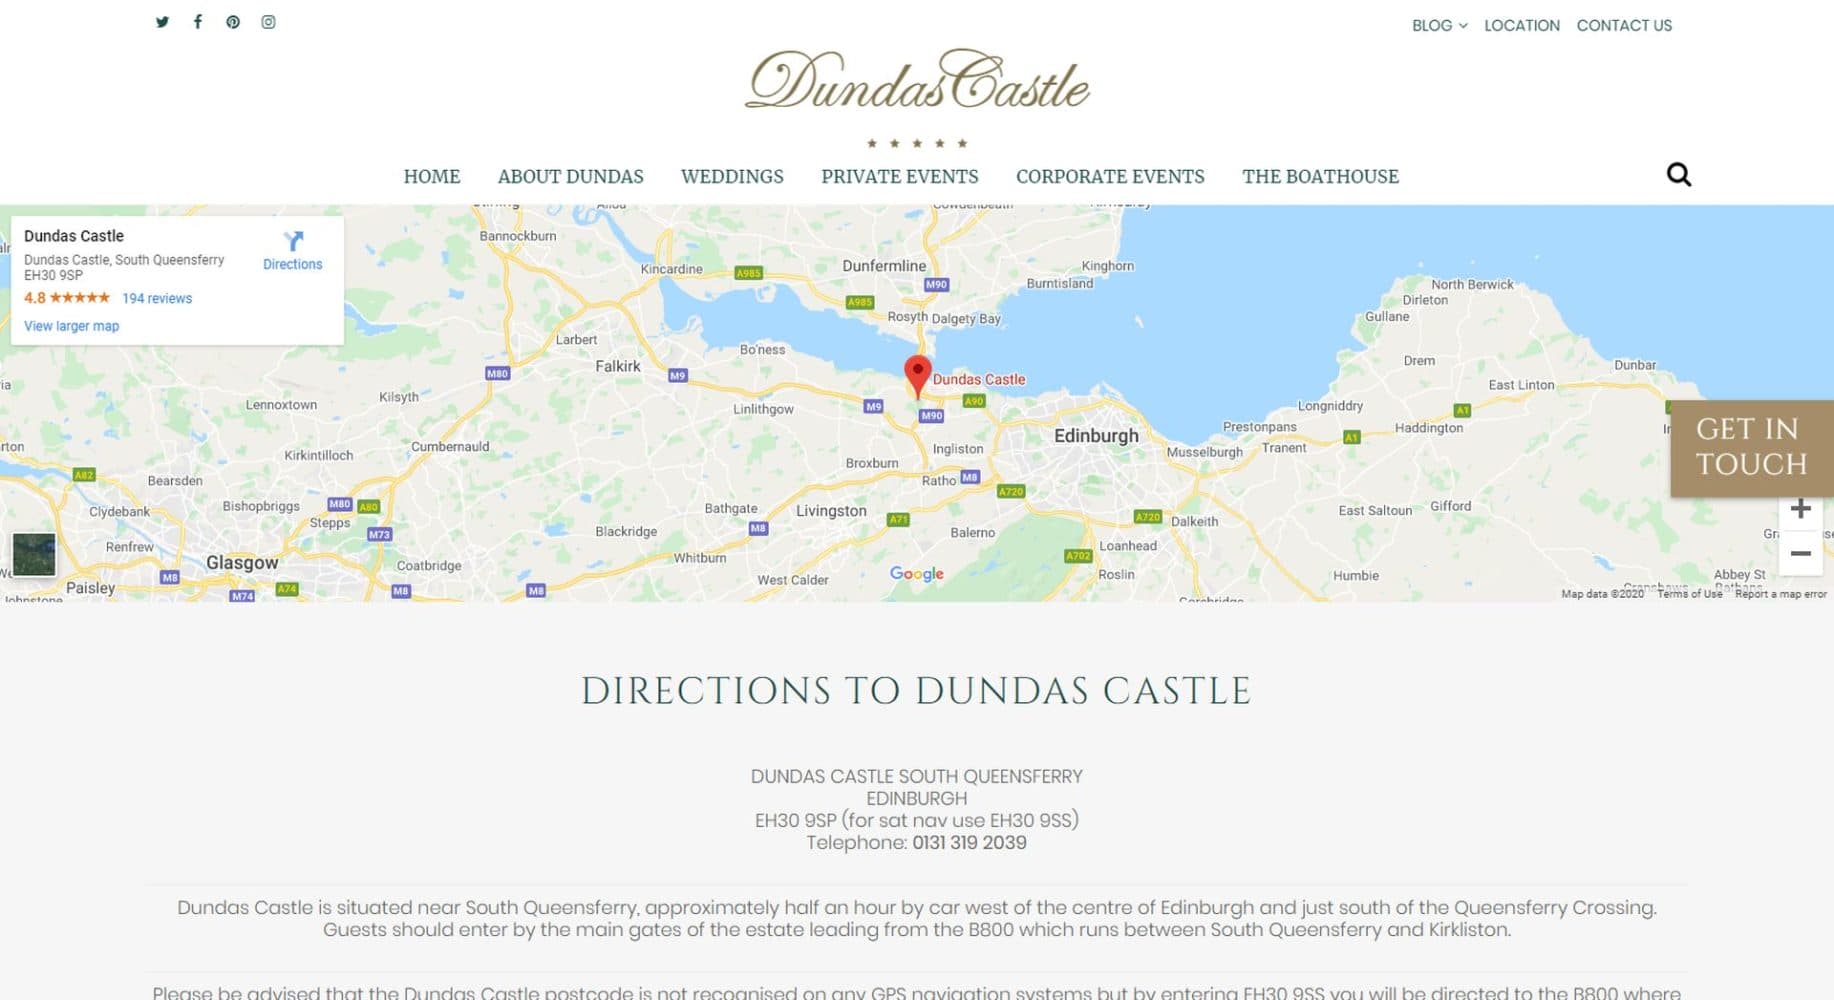 Dundas Castle Website Design Location